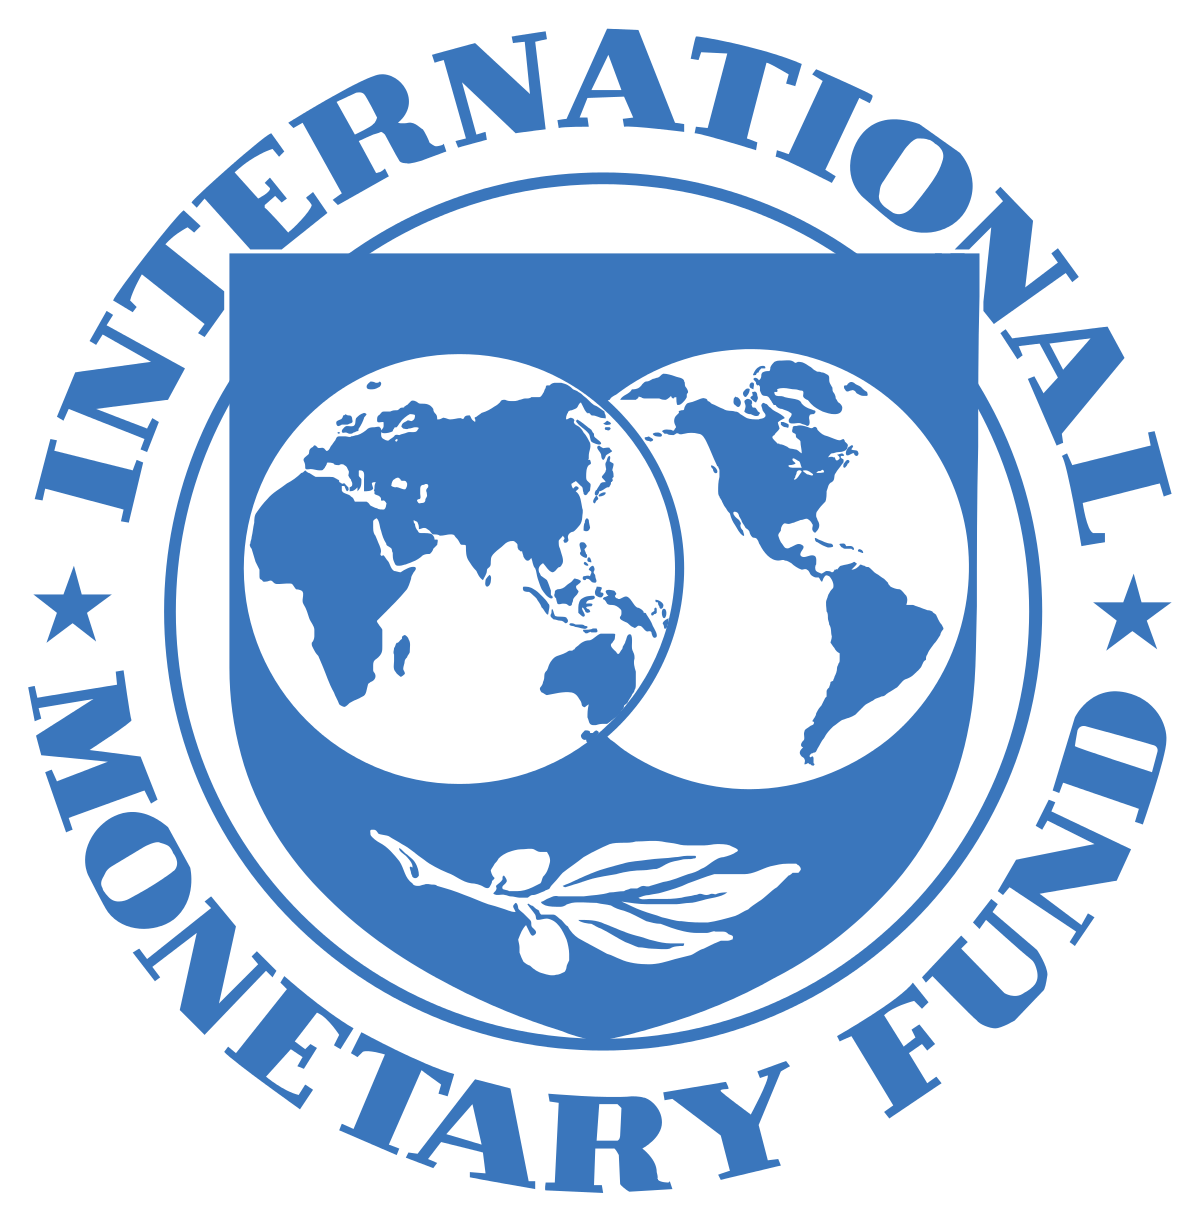 IMF 2021-2022 Youth Fellowship